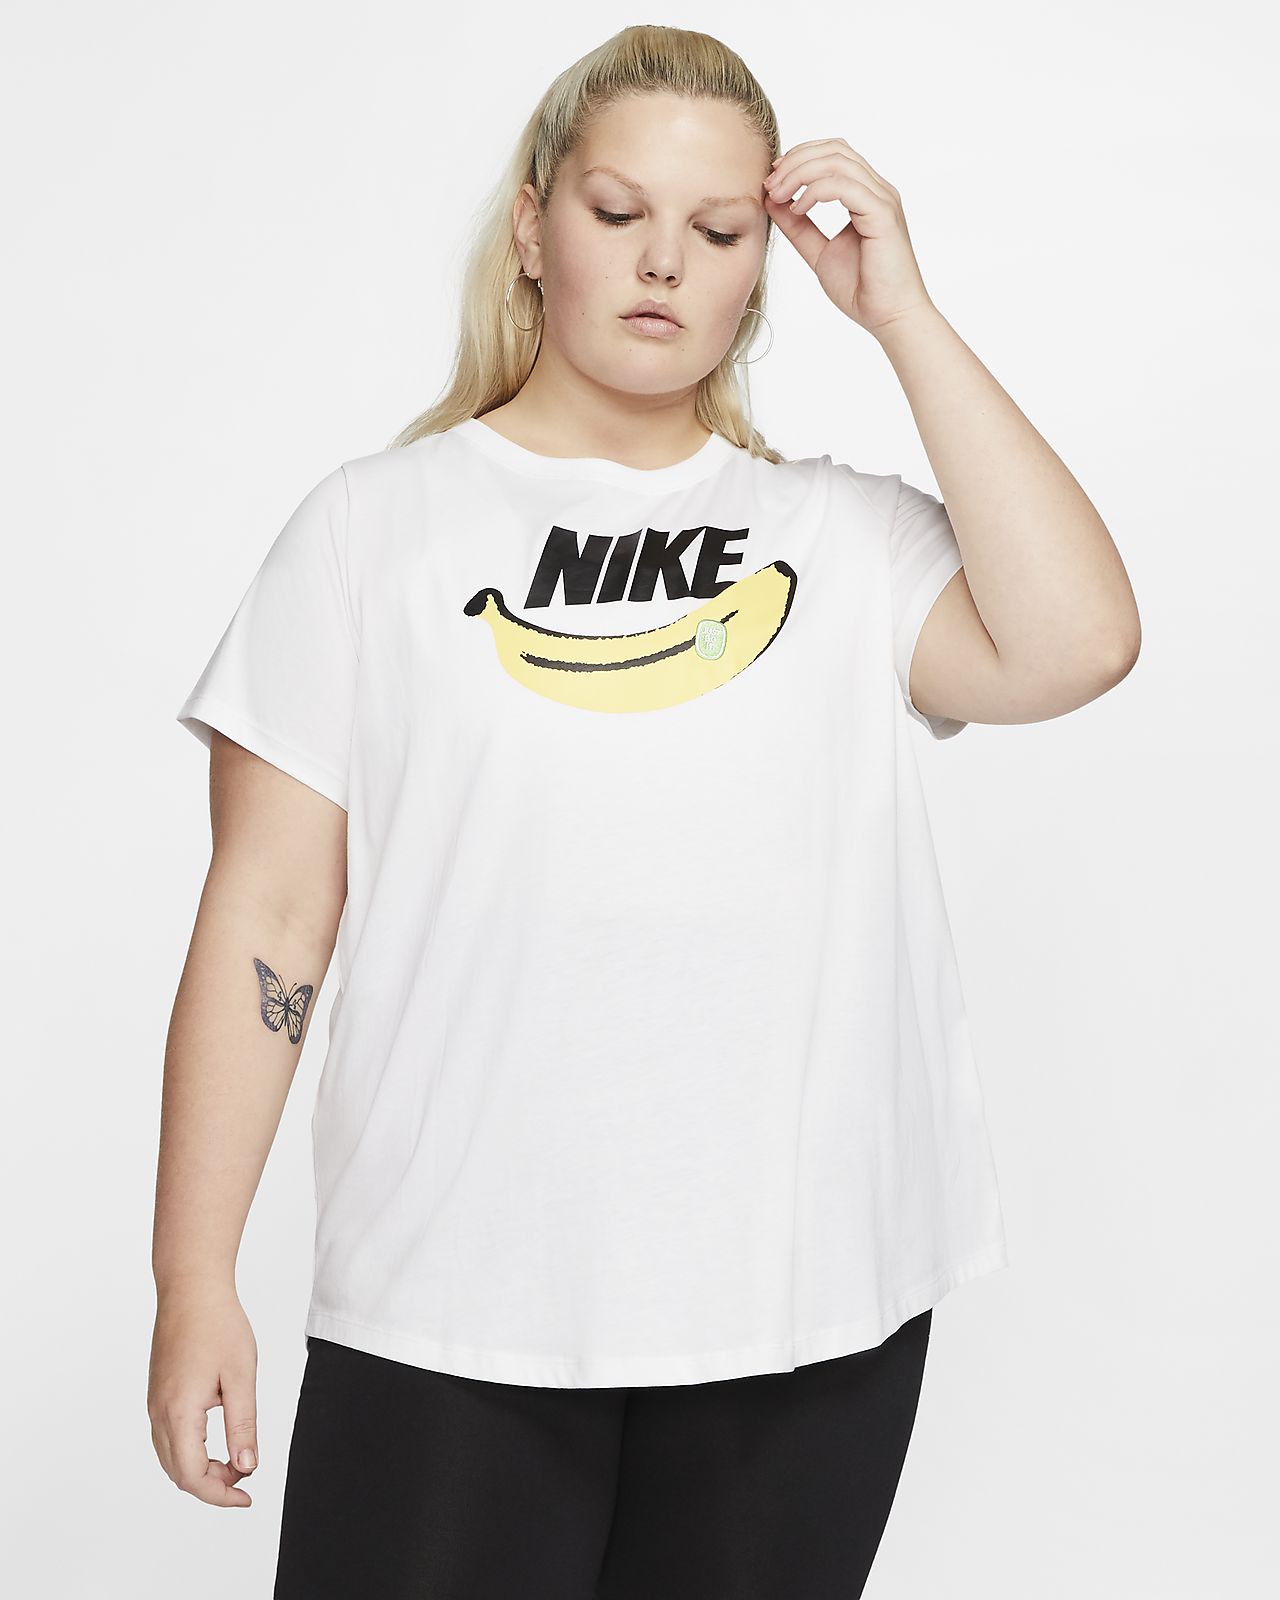 Nike Sportswear Women's Printed T-Shirt 